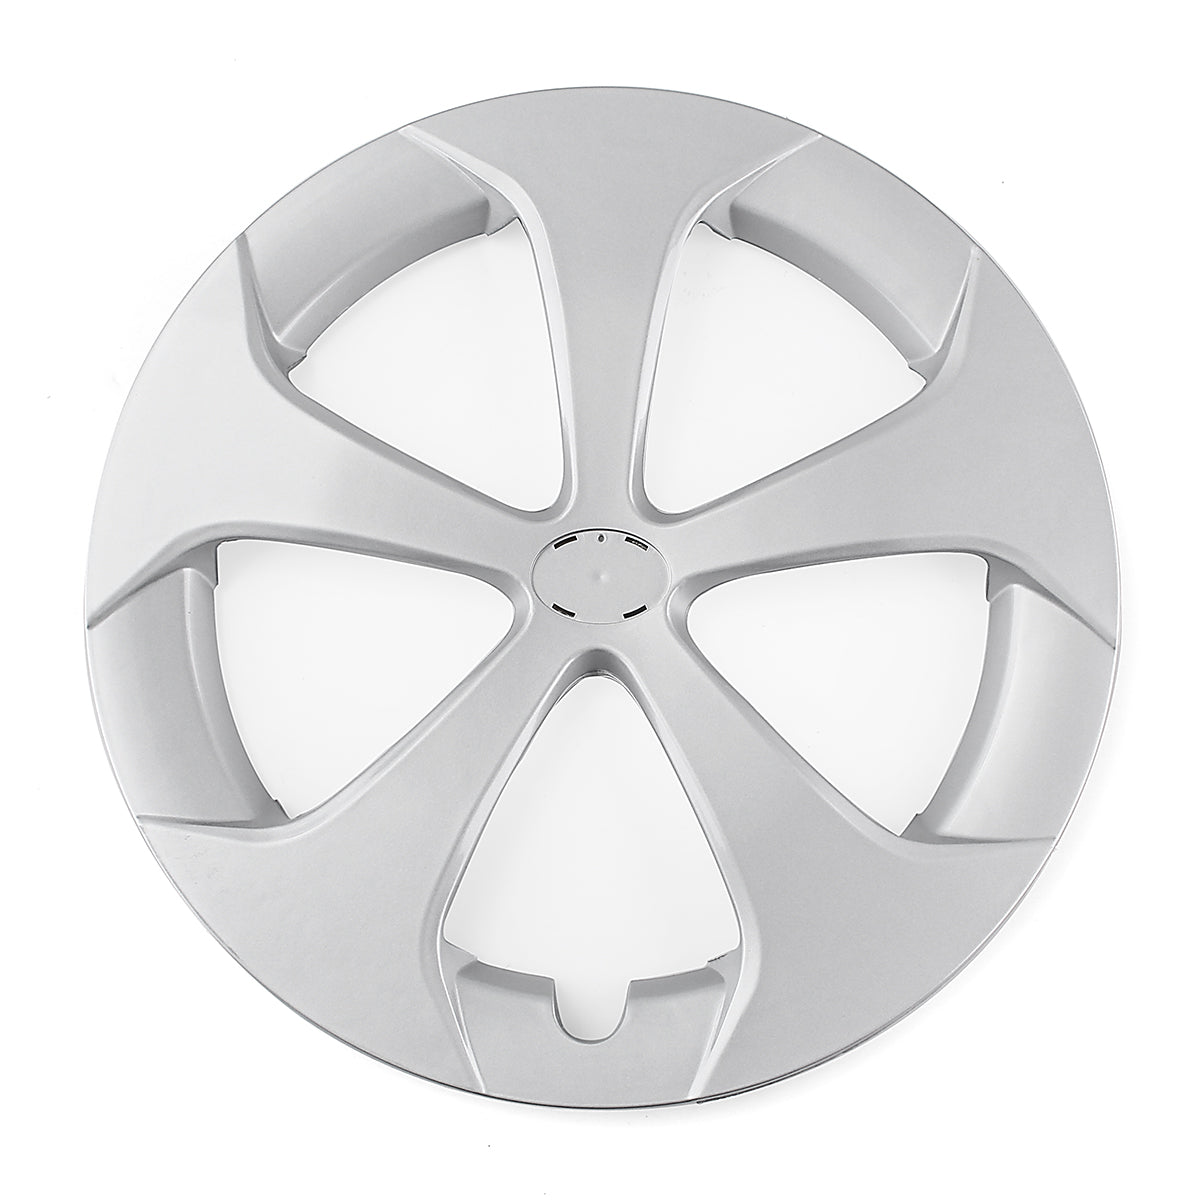 Light Gray 40.8cm Silver Plastic Car Wheel Tire Cover for Toyota Prius/Prius C 2012-2015